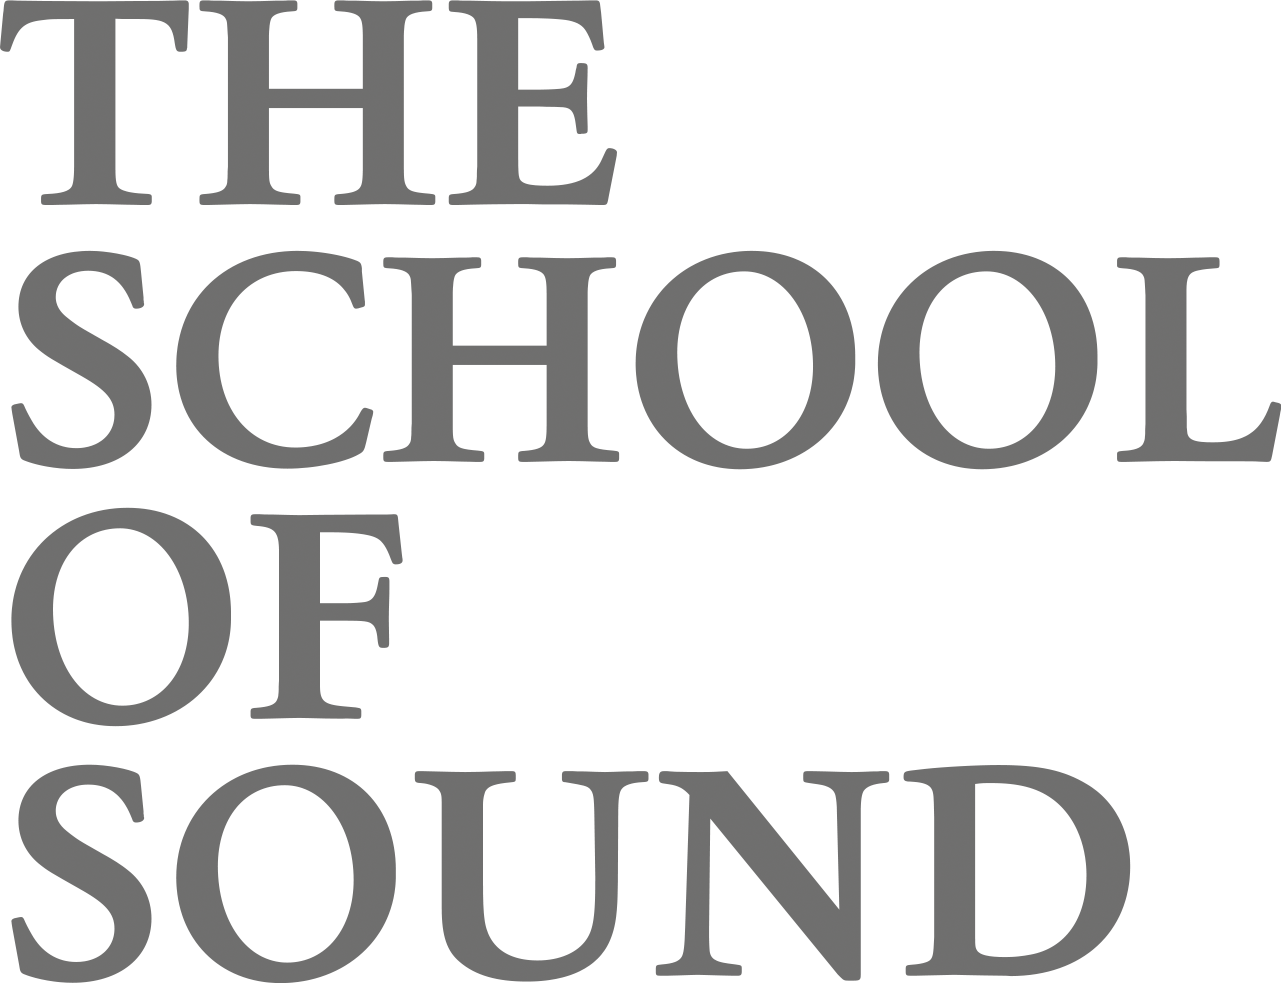 The School of Sound